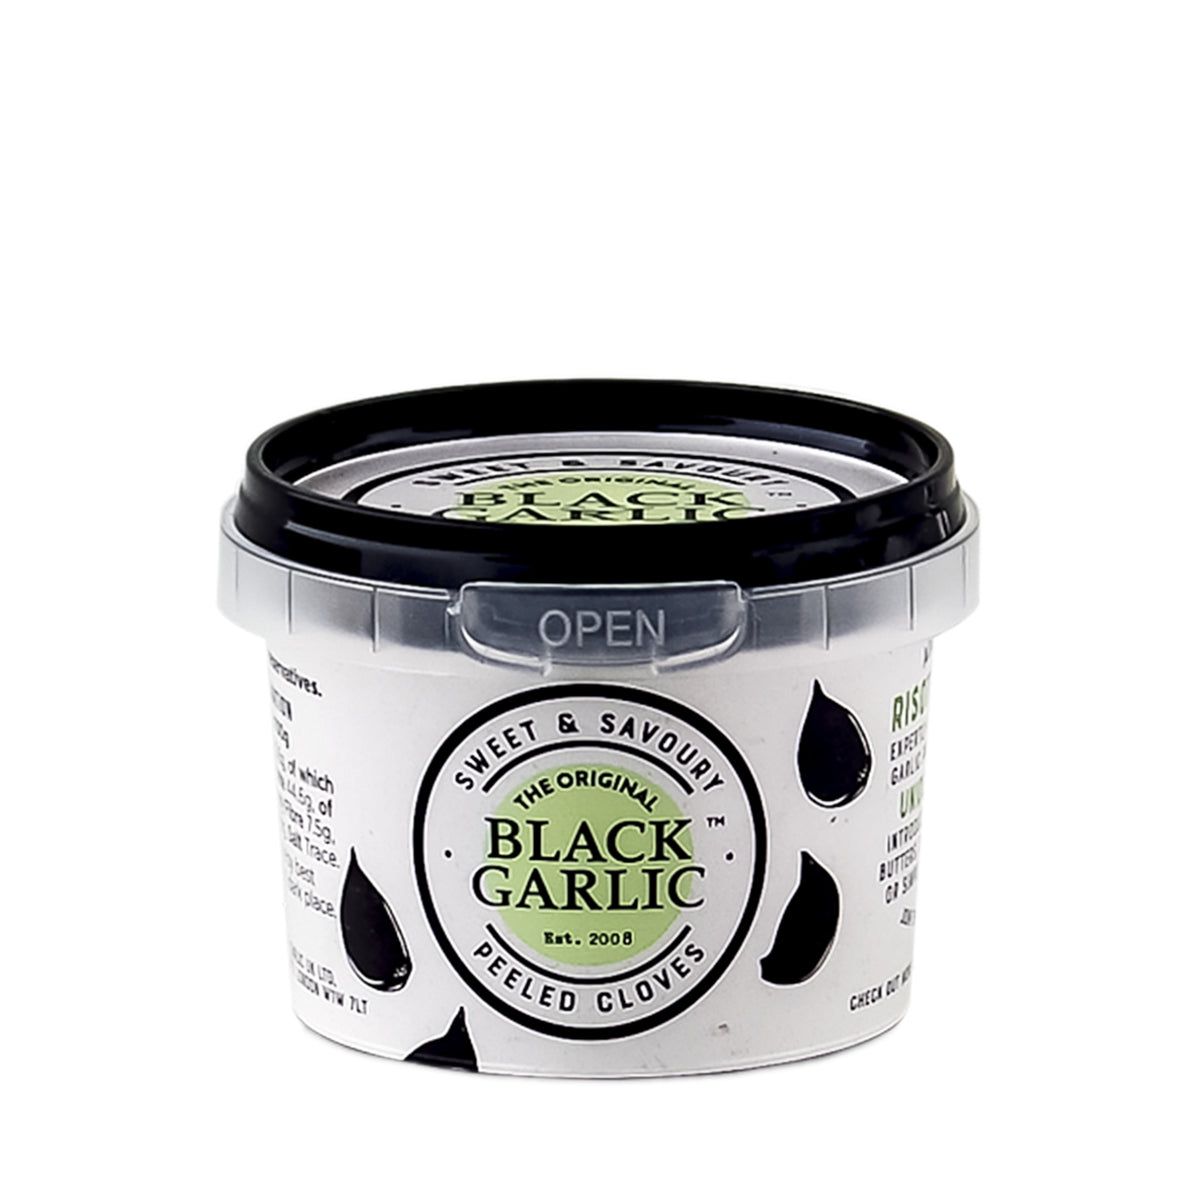 Peeled Black Garlic, The Original Black Garlic